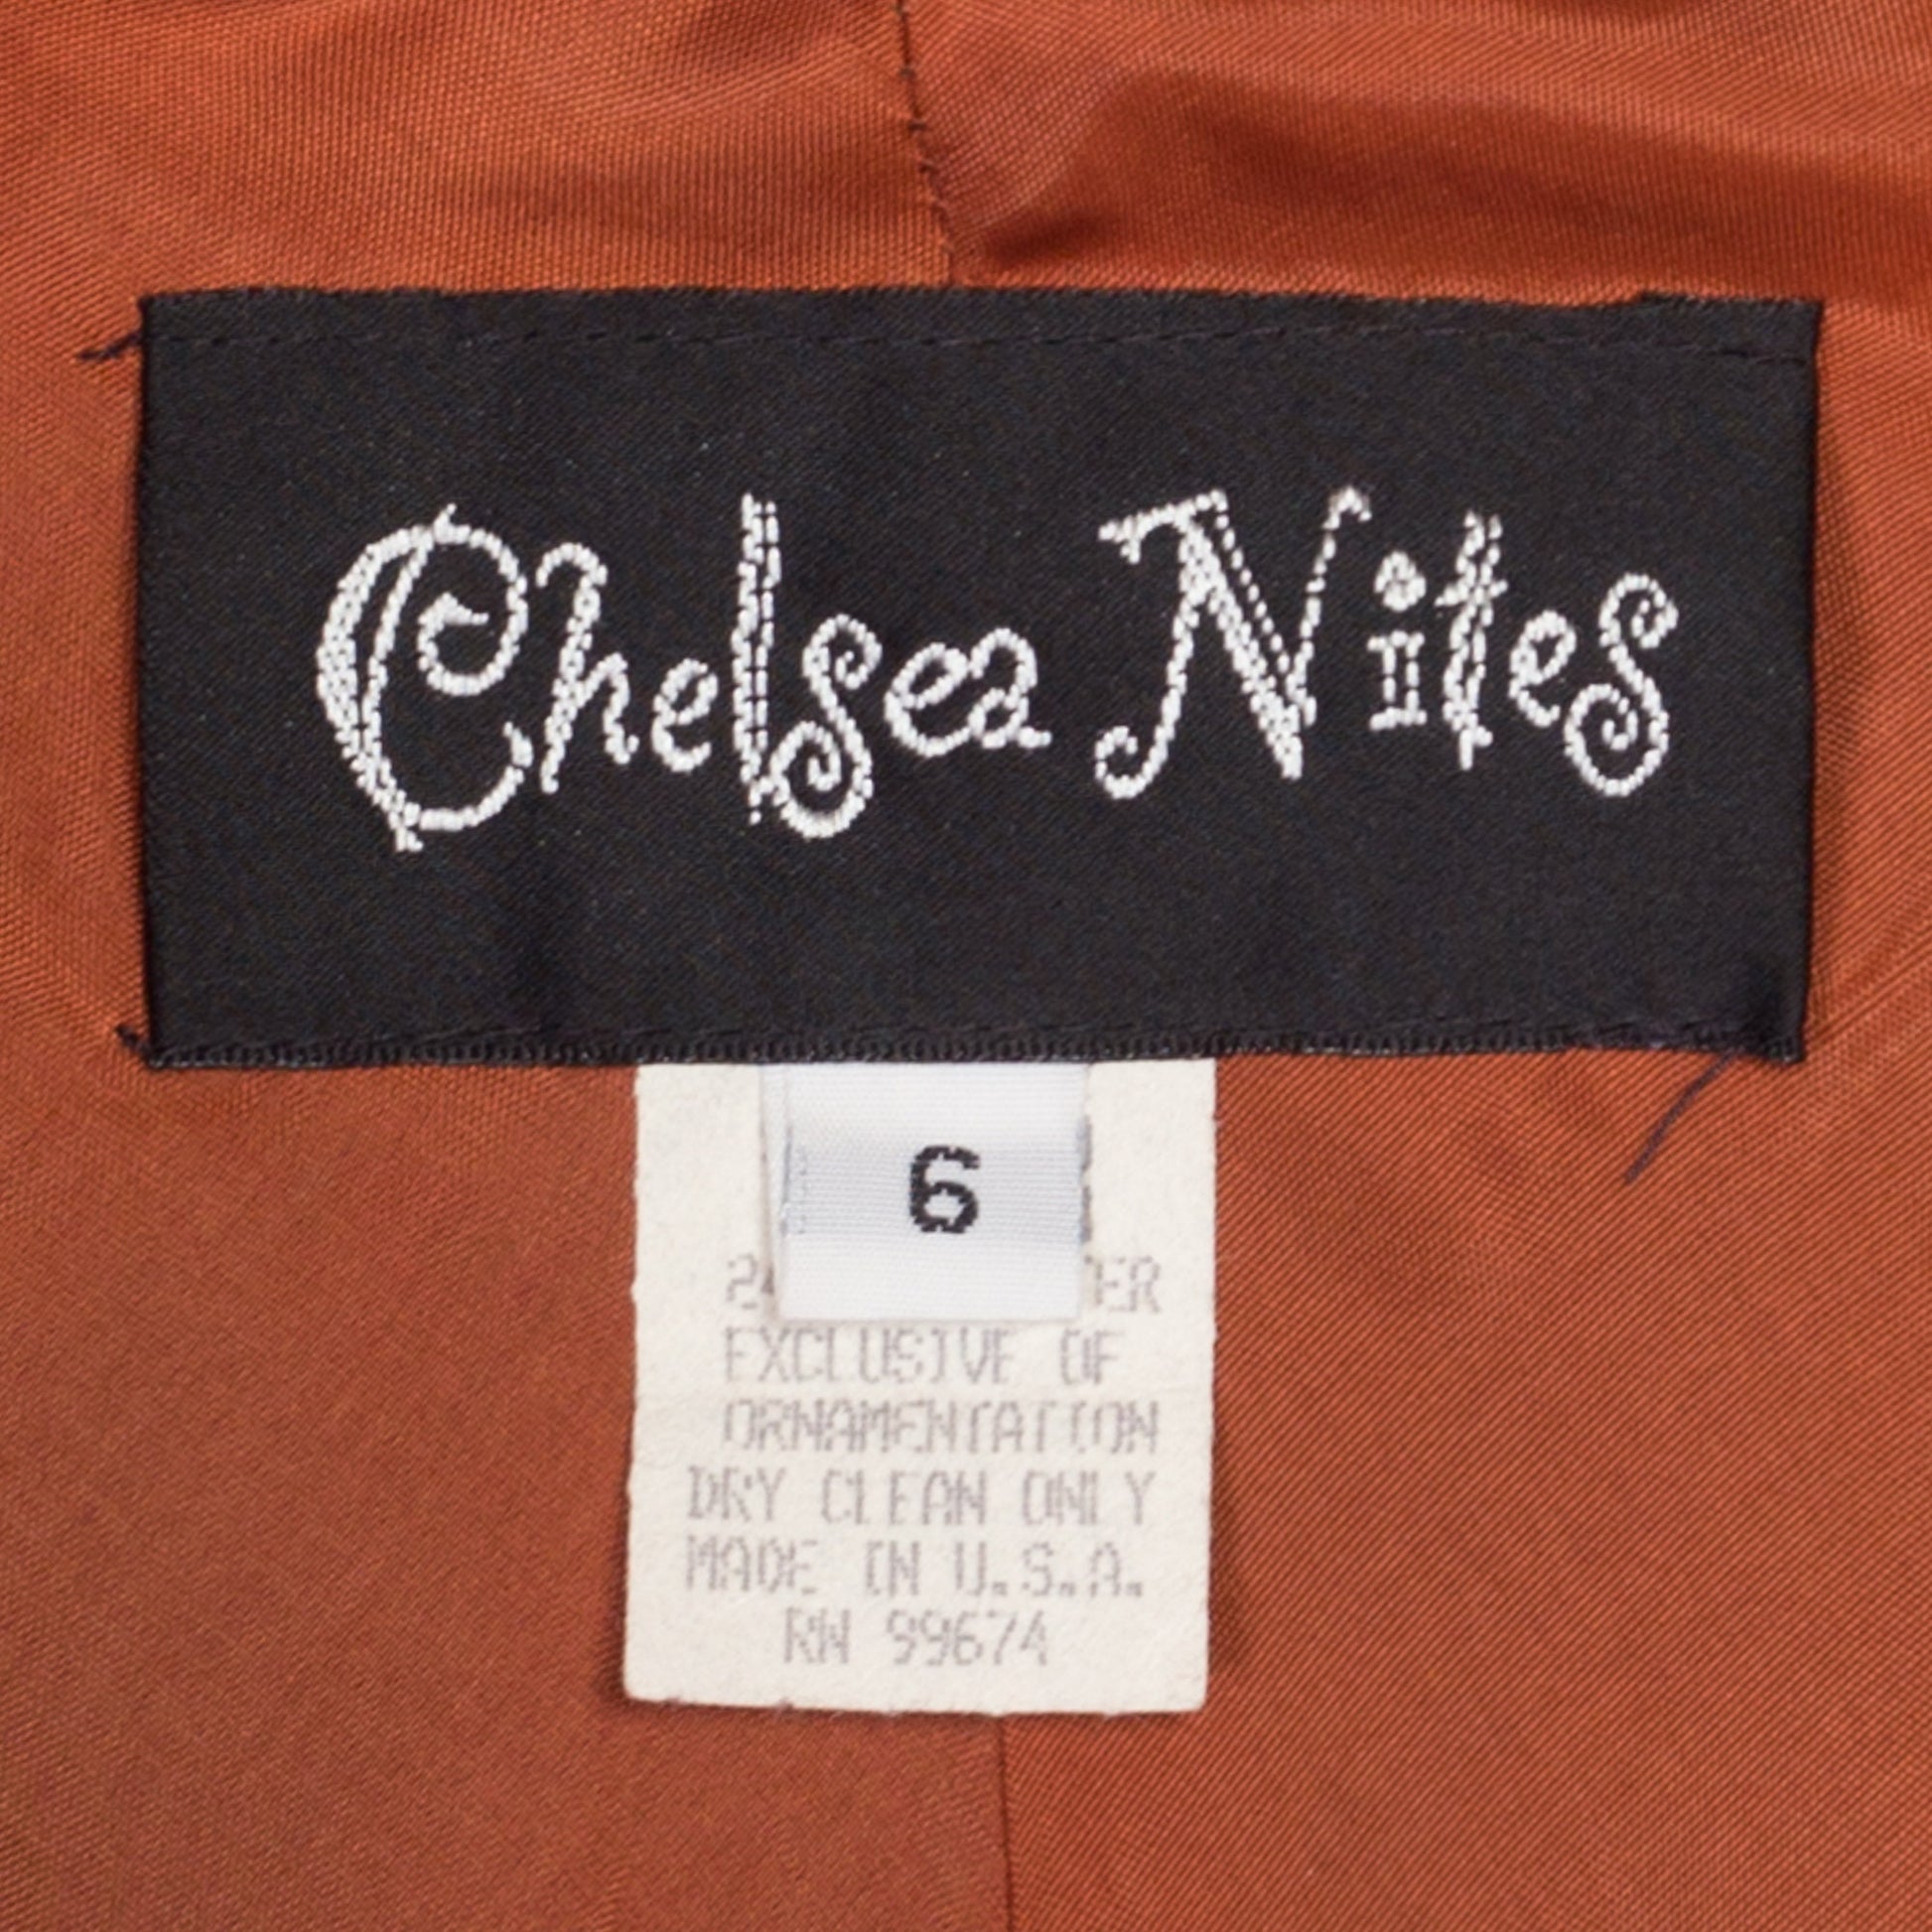 Small 90s Slinky Copper Satin Bias Cut Gown | Vintage Chelsea Nites Sleeveless Halter Racerback Formal Maxi Dress